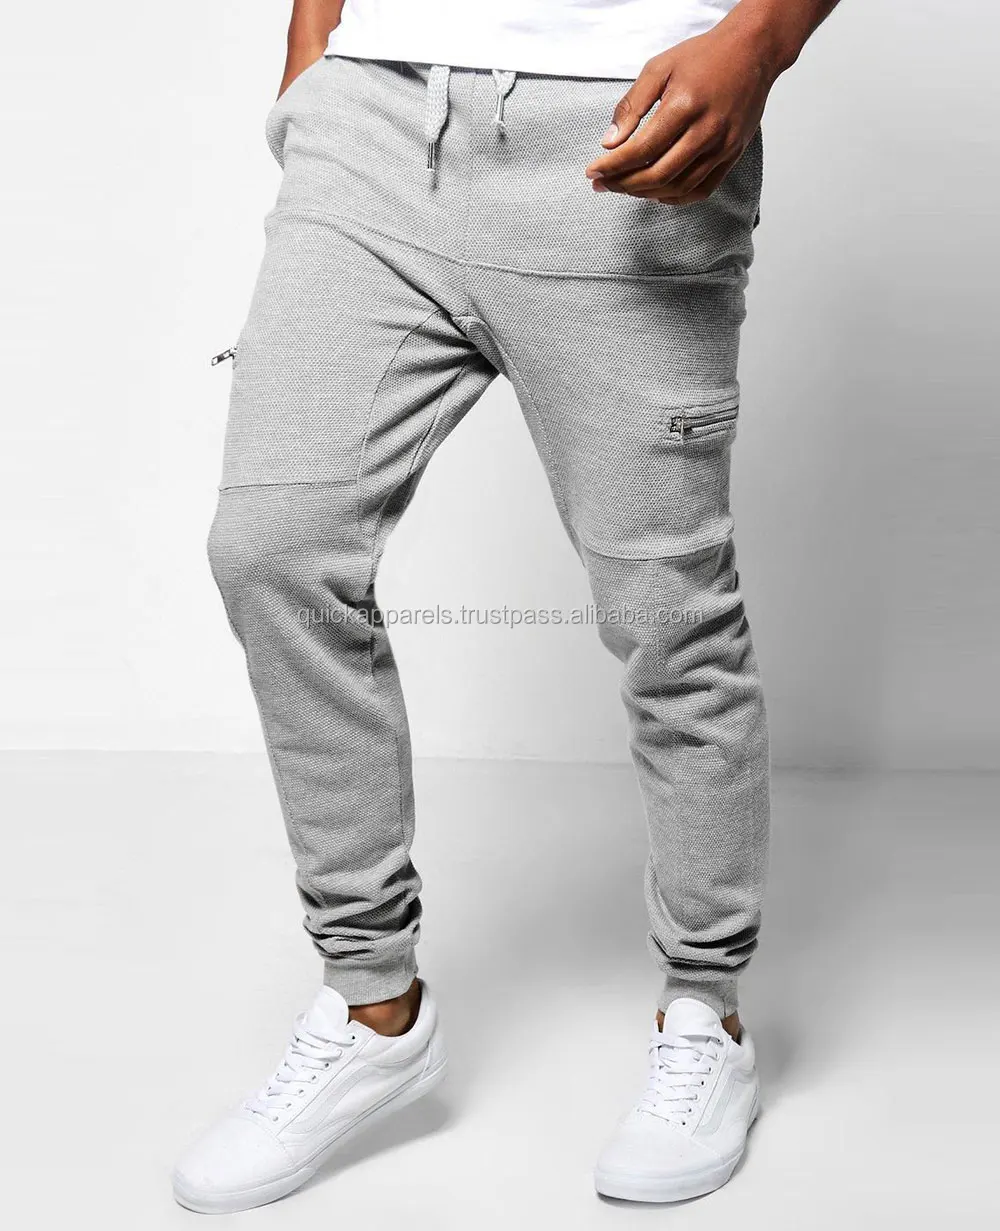 men's track pants with zipper pockets